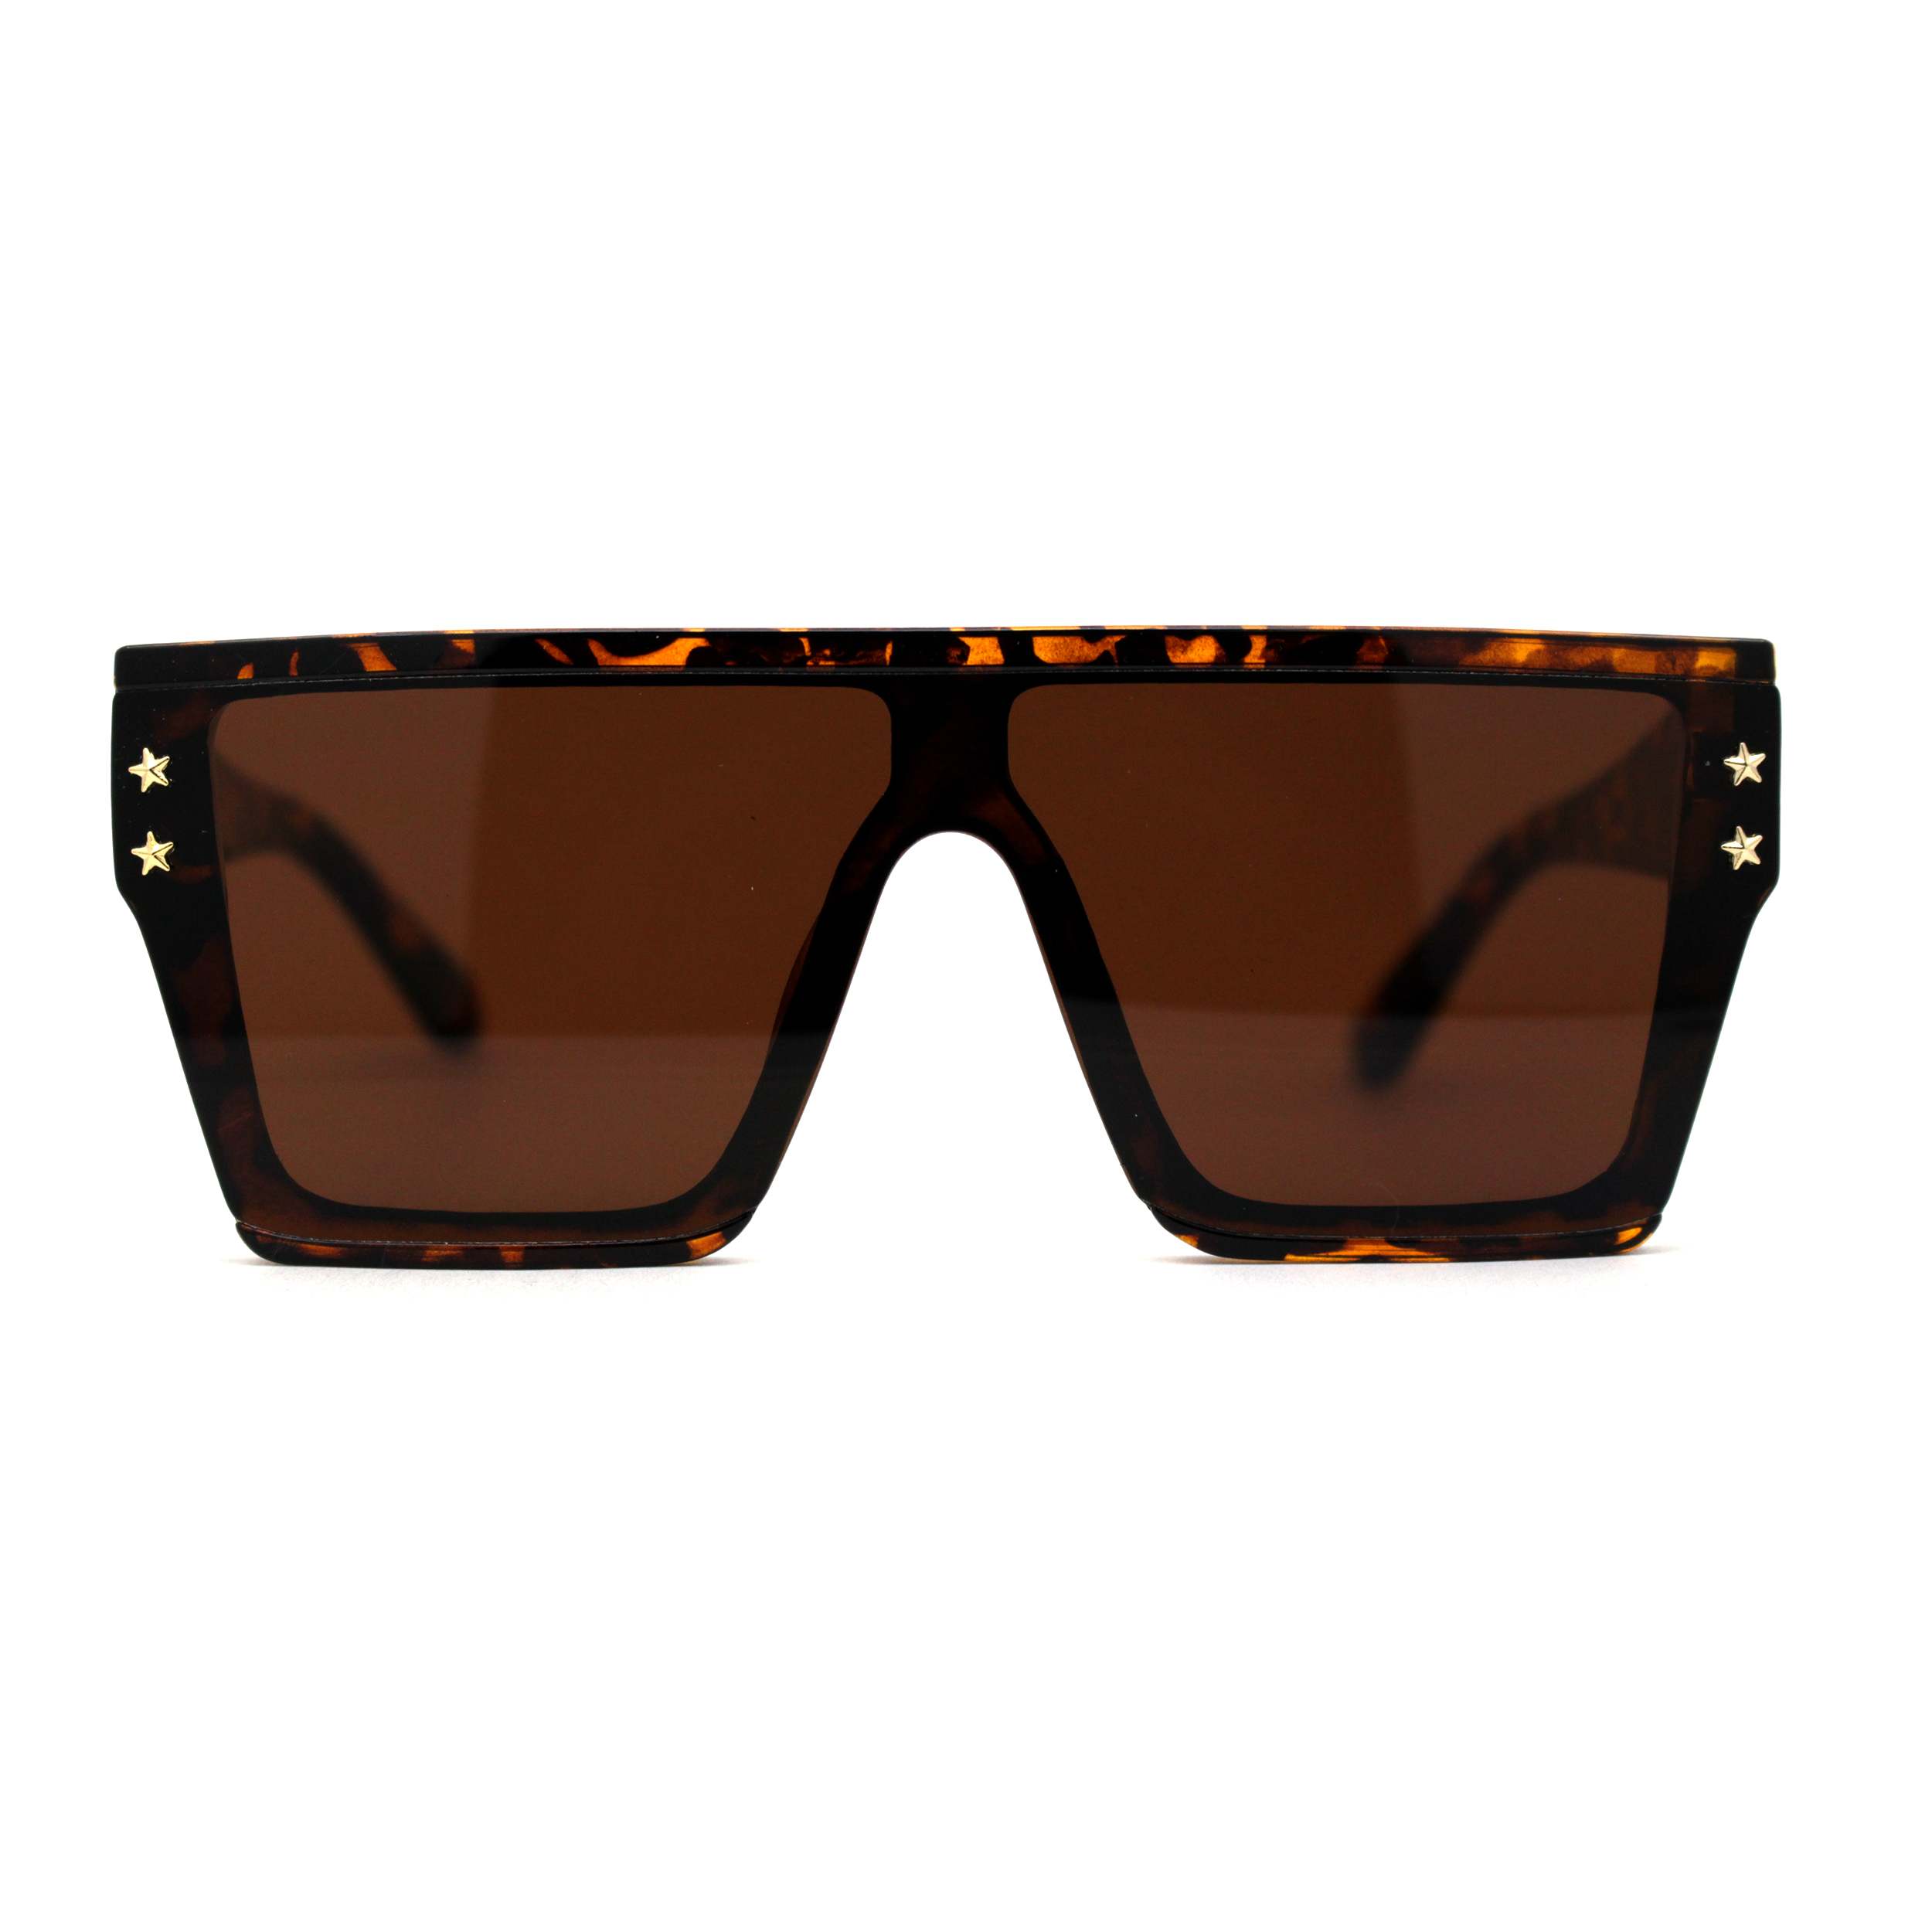 Womens Star Stud Trim Flat Top Shield Mob Plastic Sunglasses Tortoise Brown - image 1 of 4